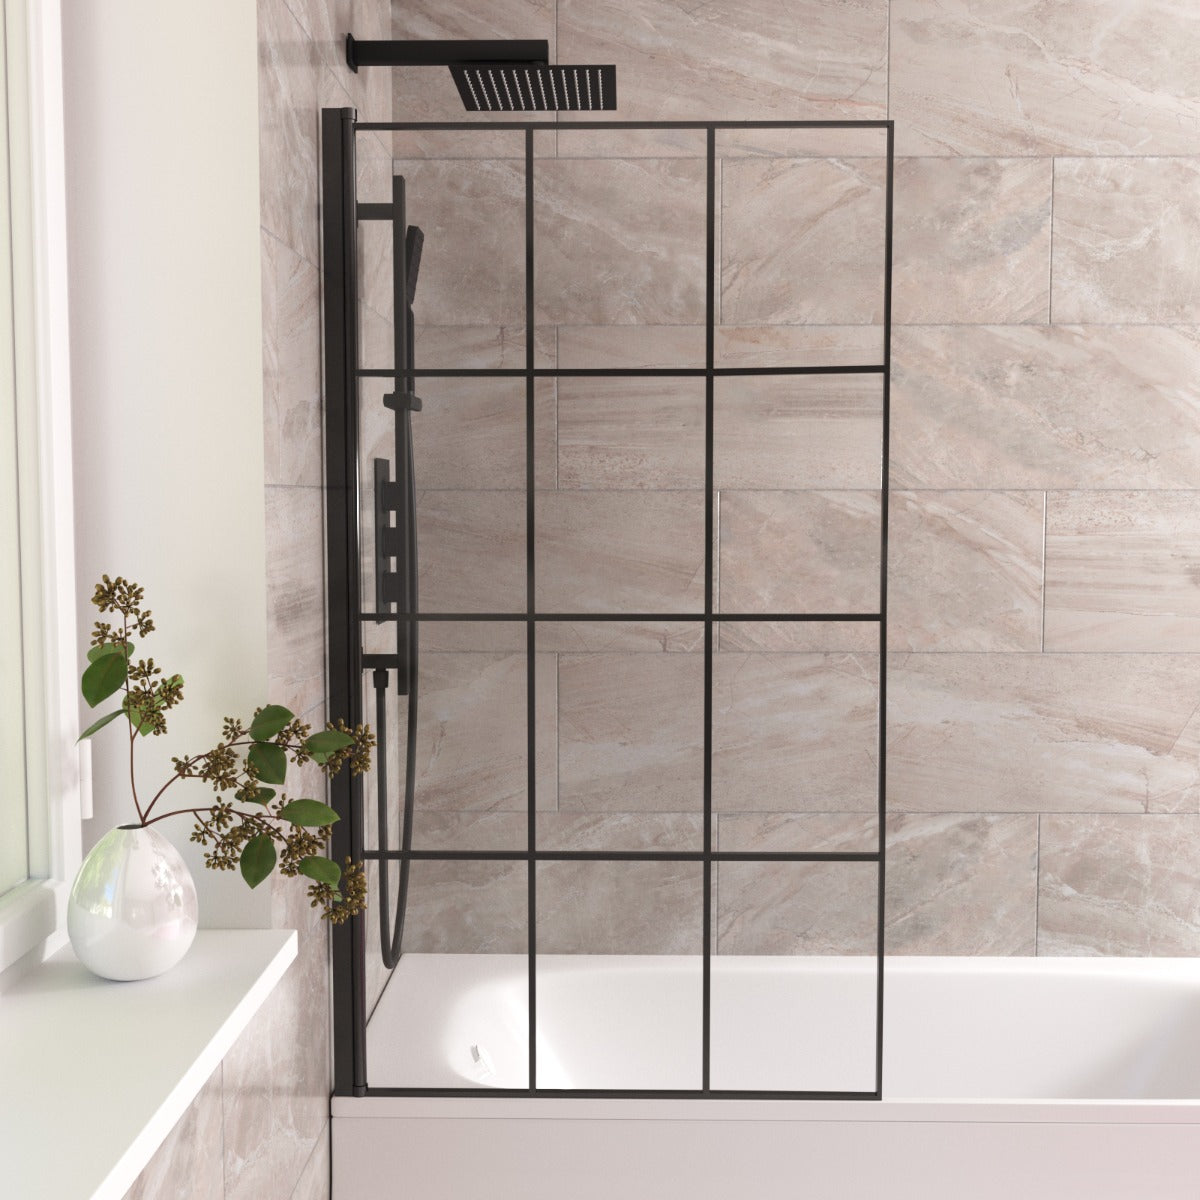 Oaken 800mm Square Bath Screen Black Profile With Grid Glass Reversible